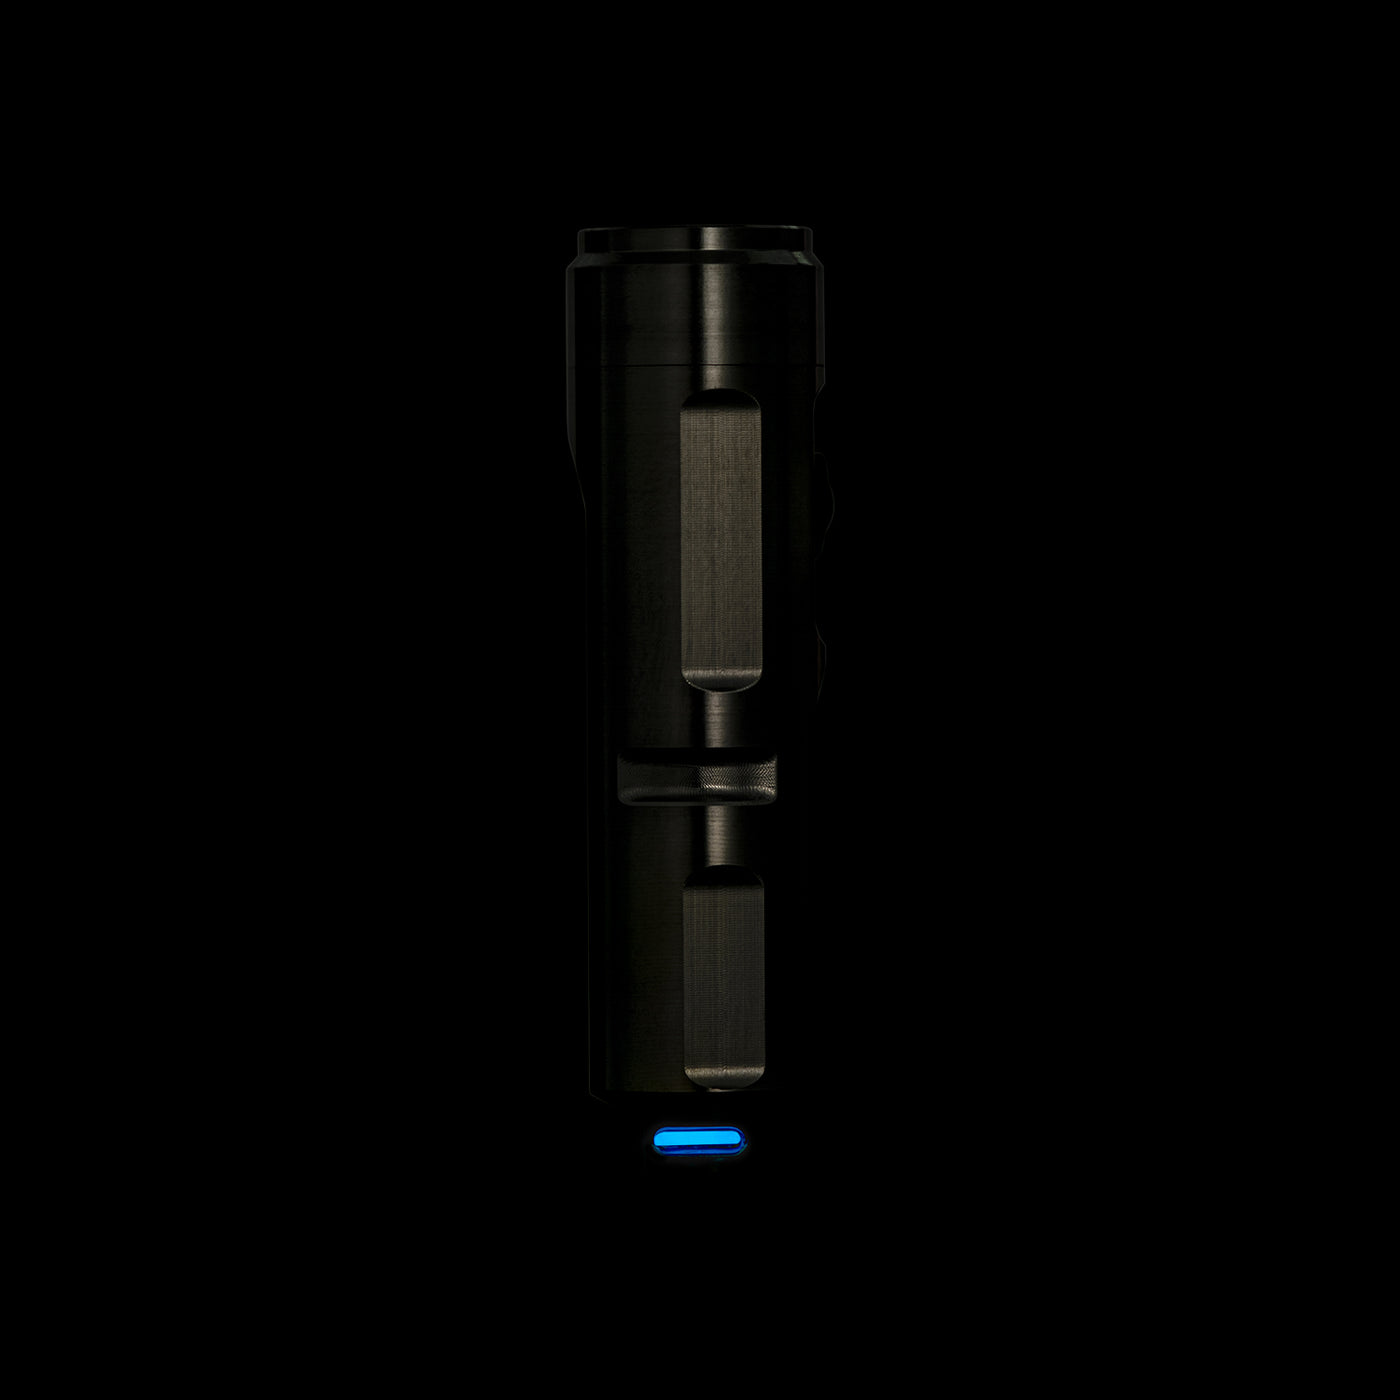 RovyVon - Aurora A4x EDC LED Flashlight | Titanium | Keychain